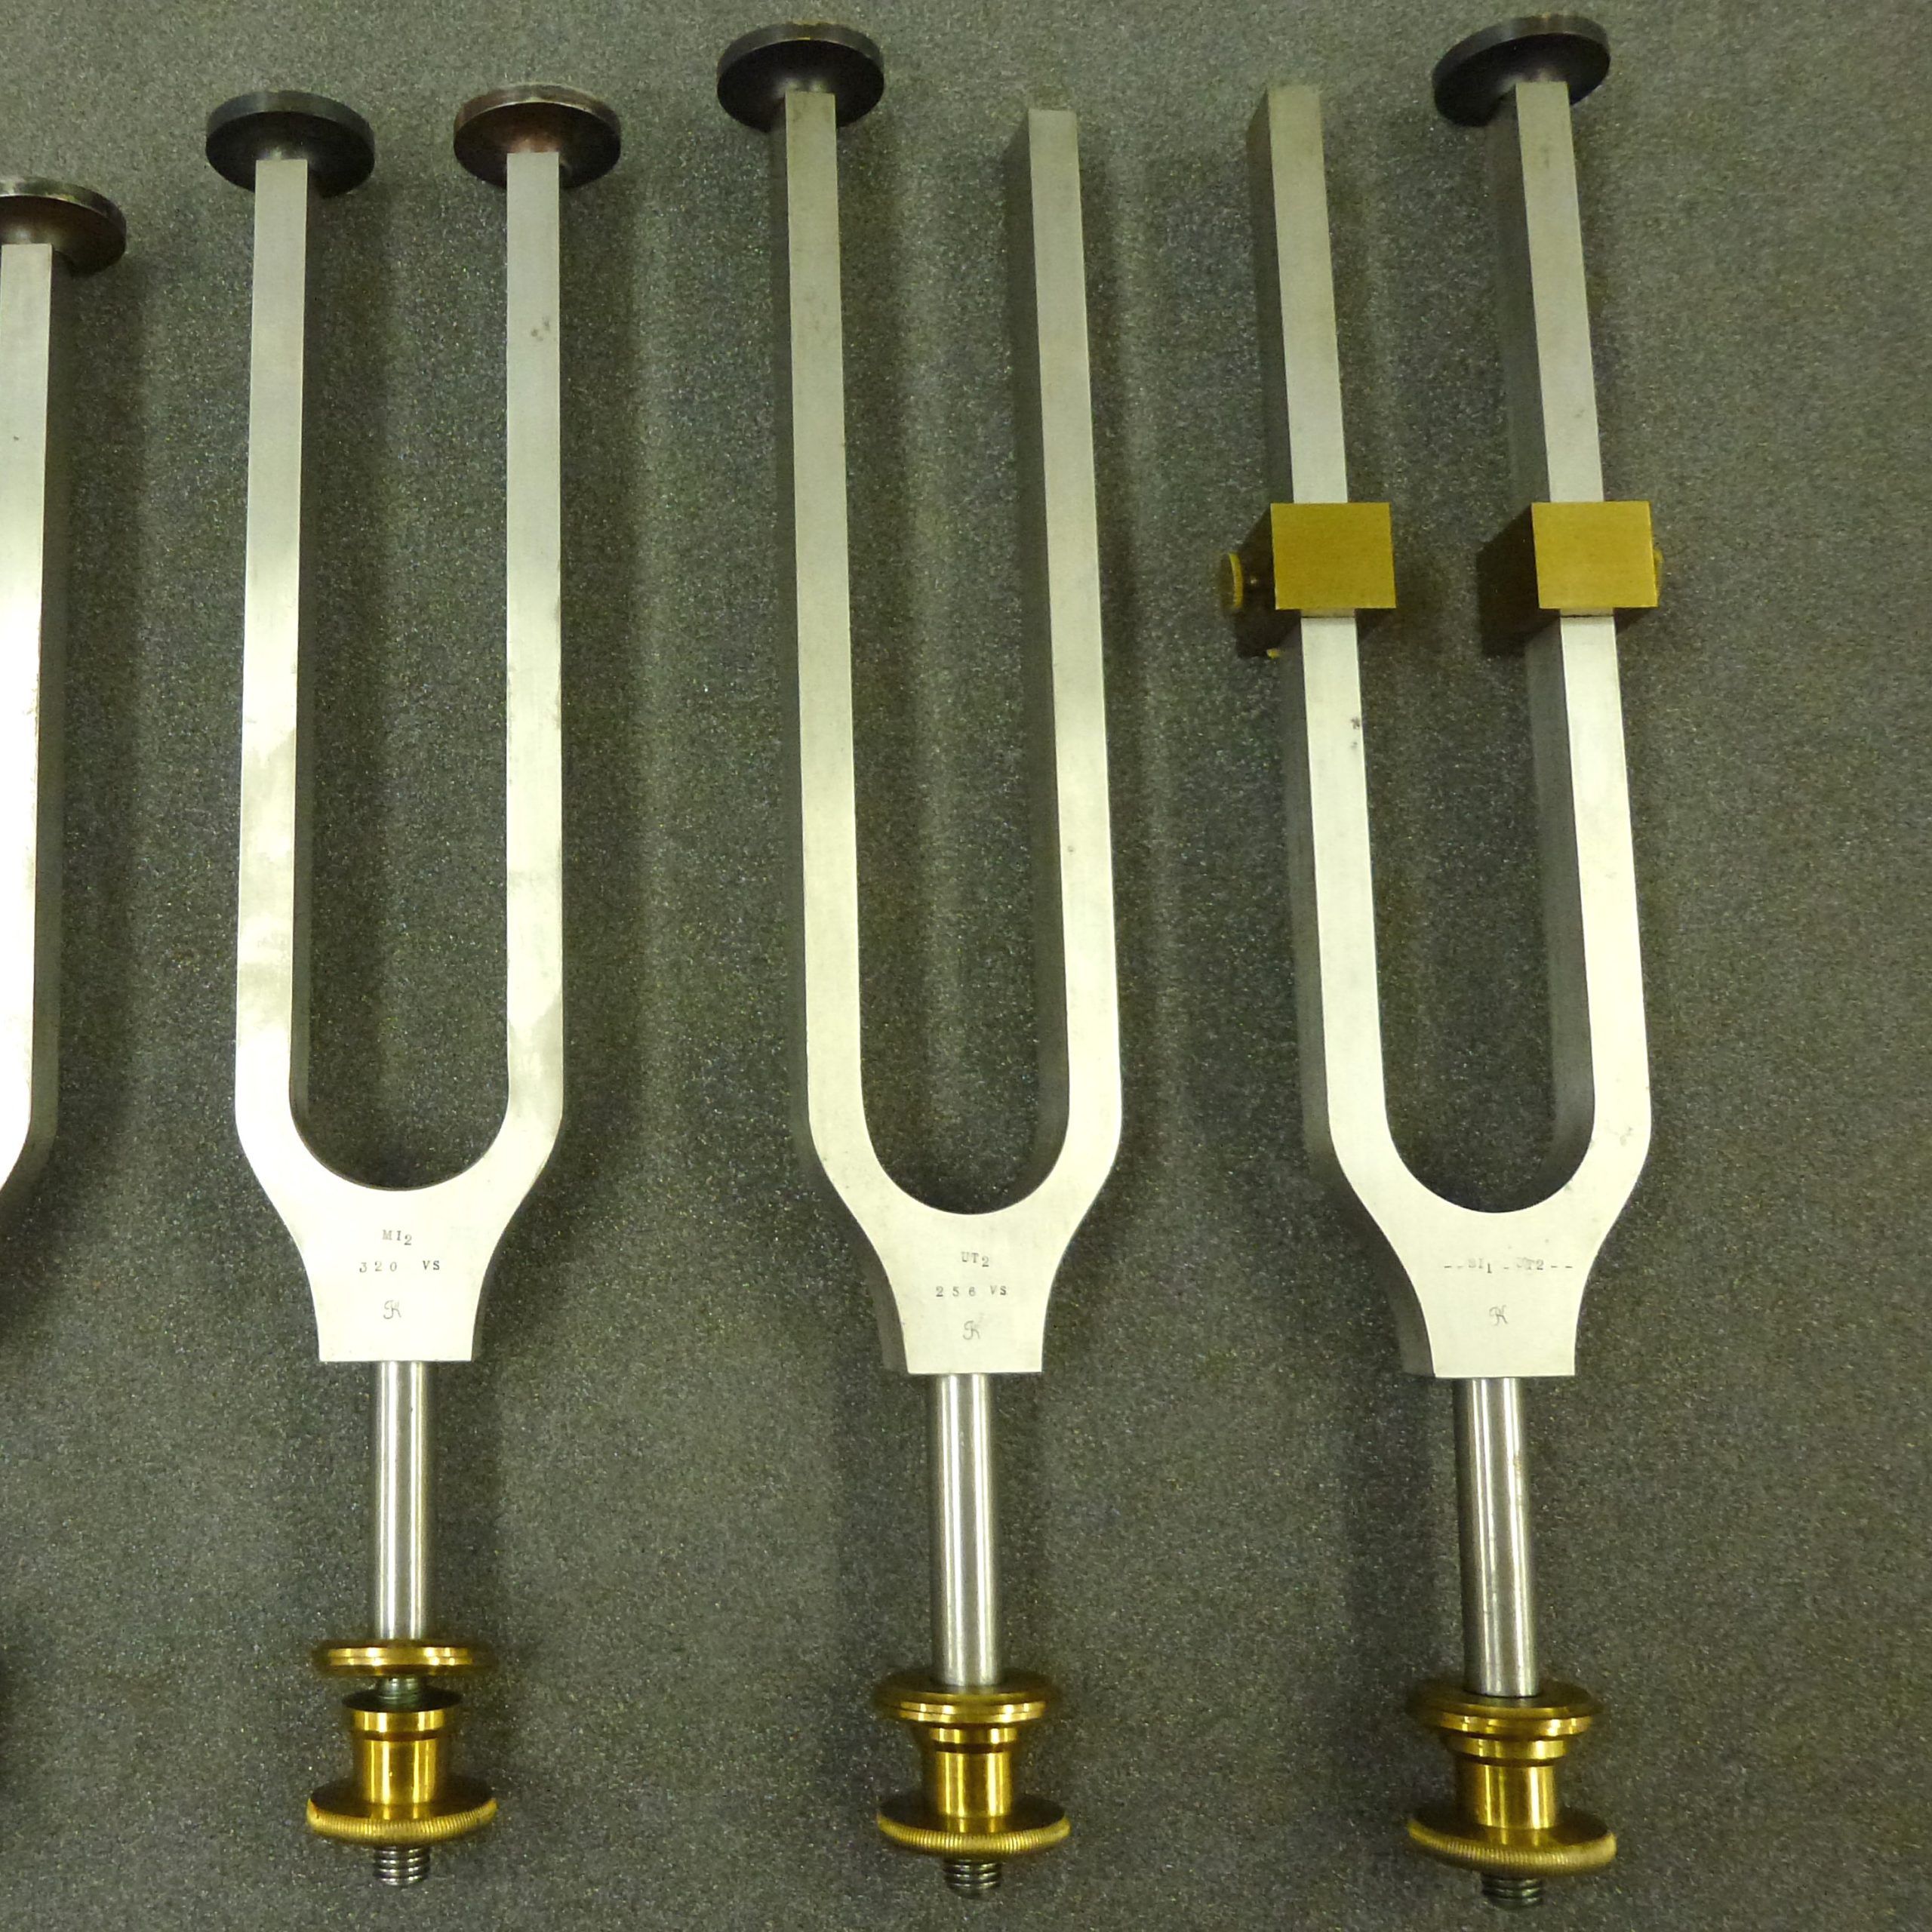 Tuning fork by Dr. R. König: UT₂